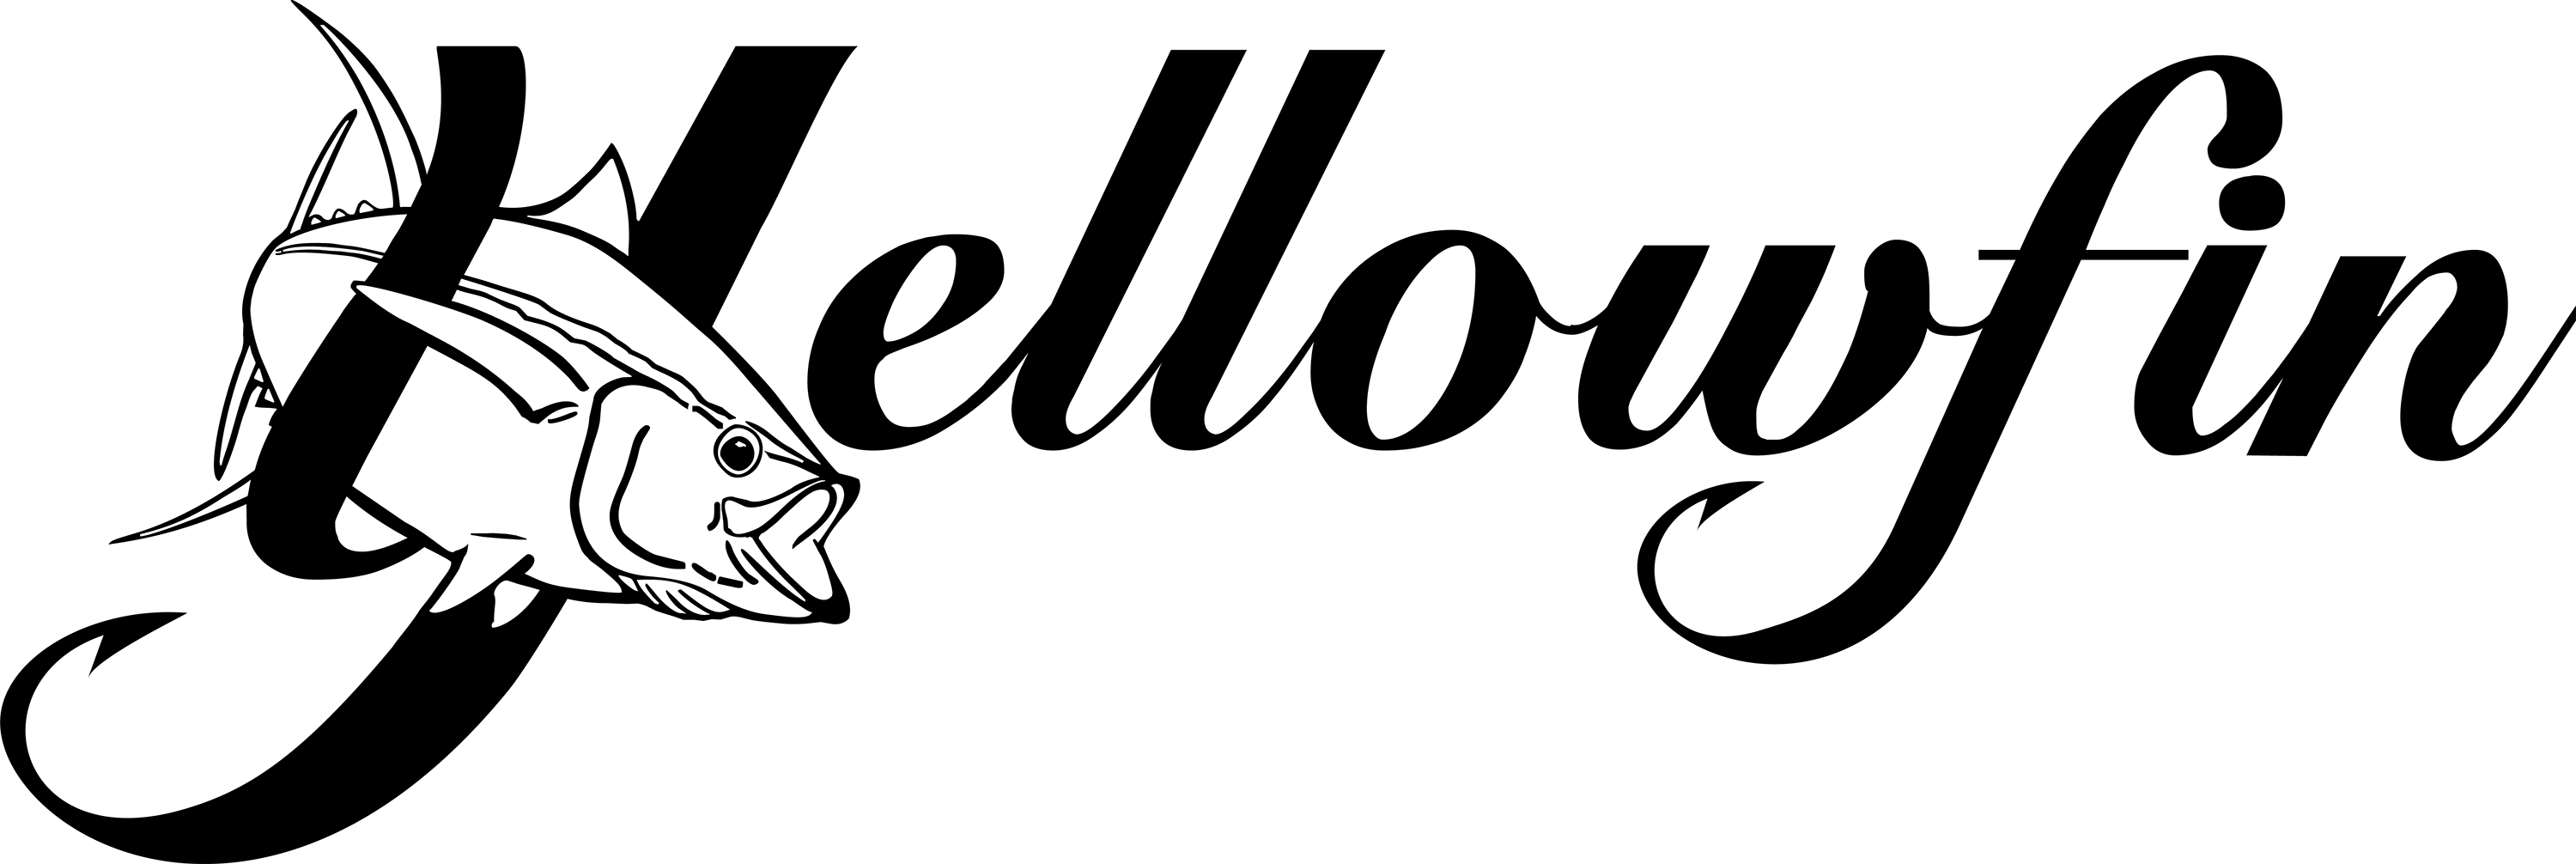 Yellowfin brand logo